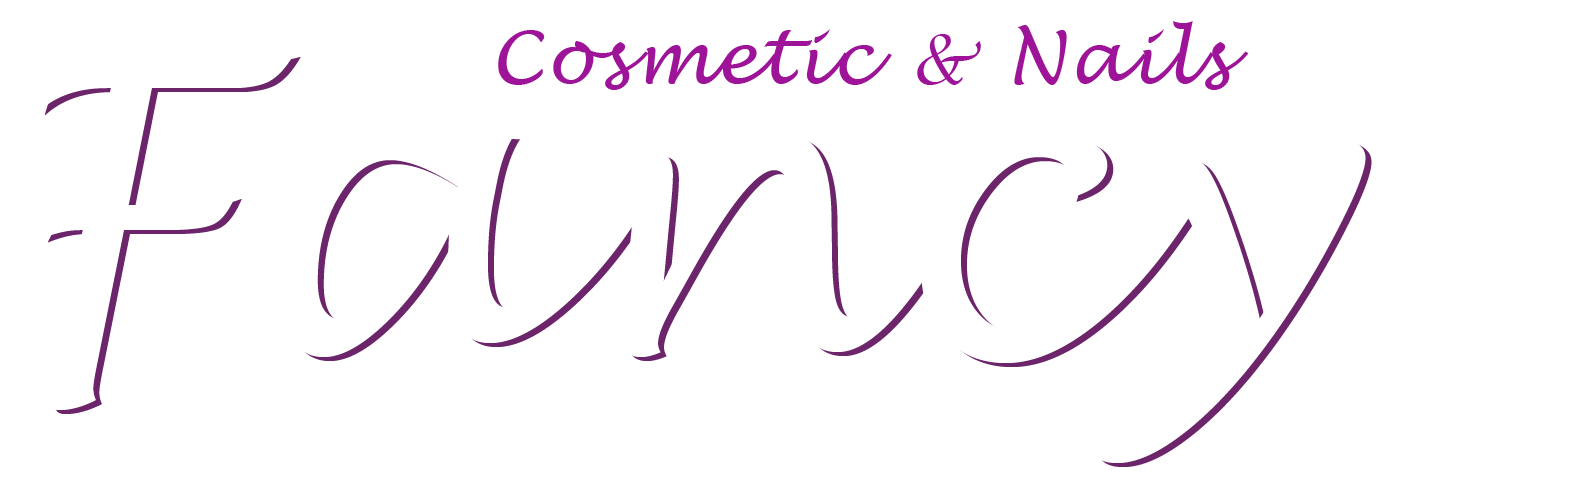 fancycosmeticnails logo